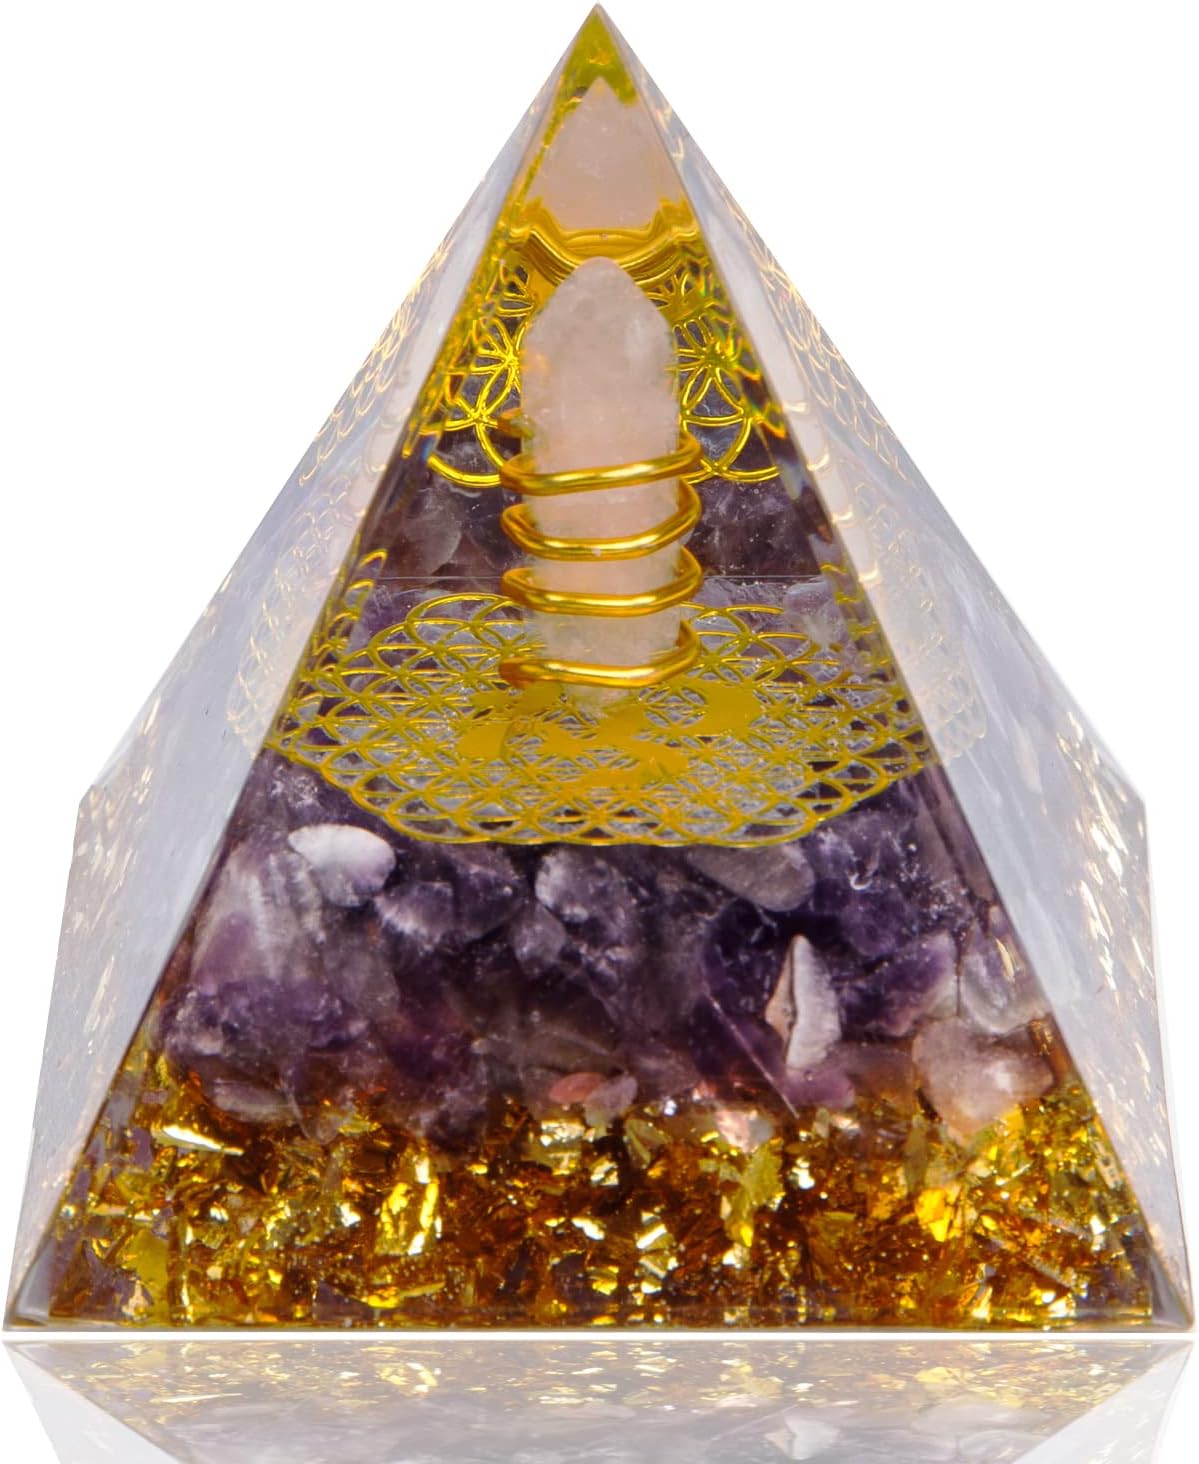 Orgone Pyramid, Small Healing Crystals Pyramid with Tiger's Eye Stones -  Ships via Amazon - USA Shipping - Premium Orgone Pyramid from Concordia Style Boutique - Just $13.47! Shop now at Concordia Style Boutique